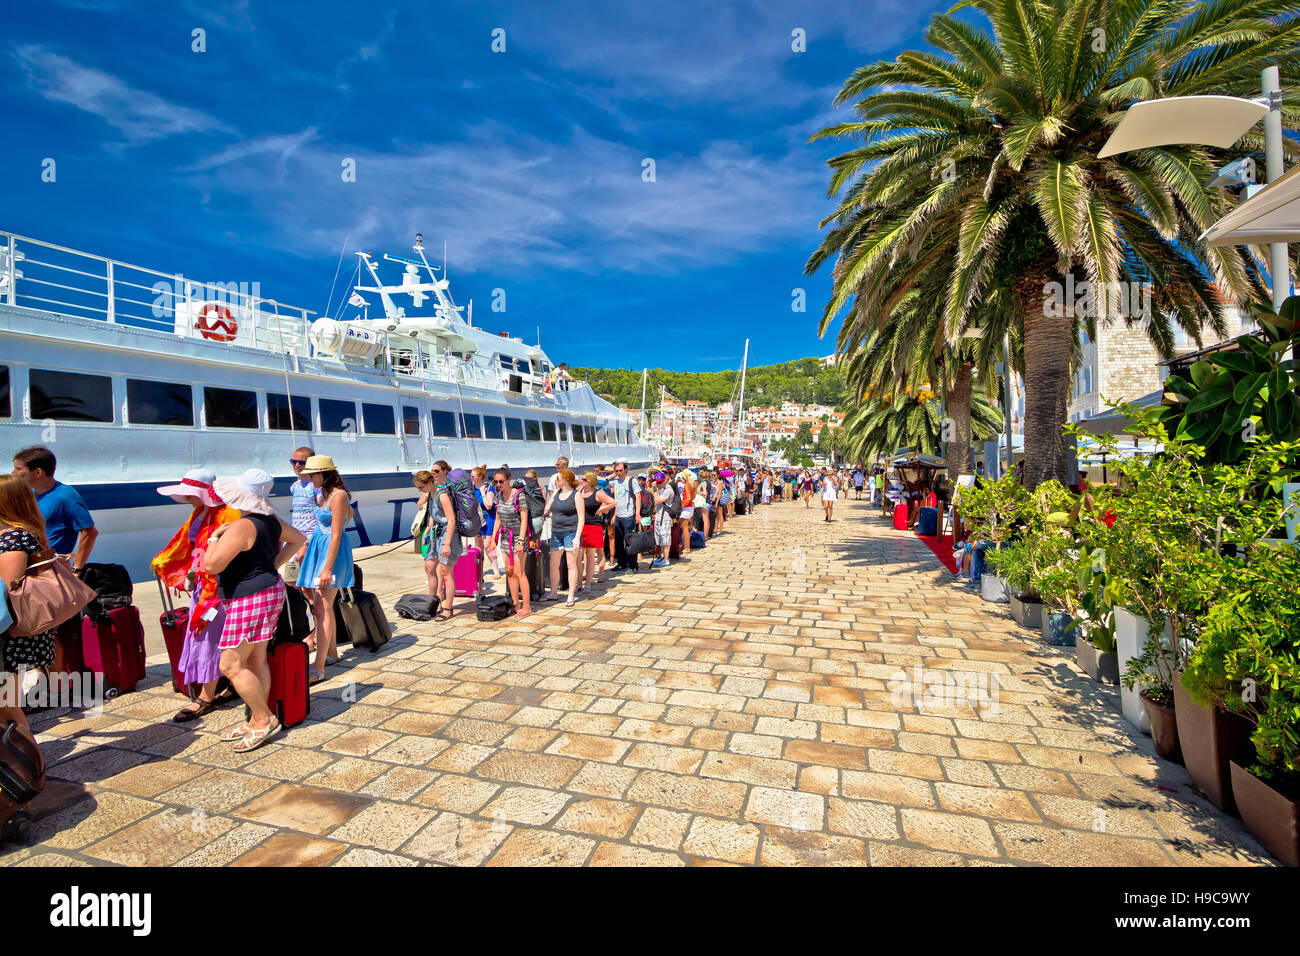 Hvar, Croatia, August 25, 2014: Hvar island harbor tourist queue. People waiting in line to board speedboat. Hvar is famous tourist destination, overc Stock Photo